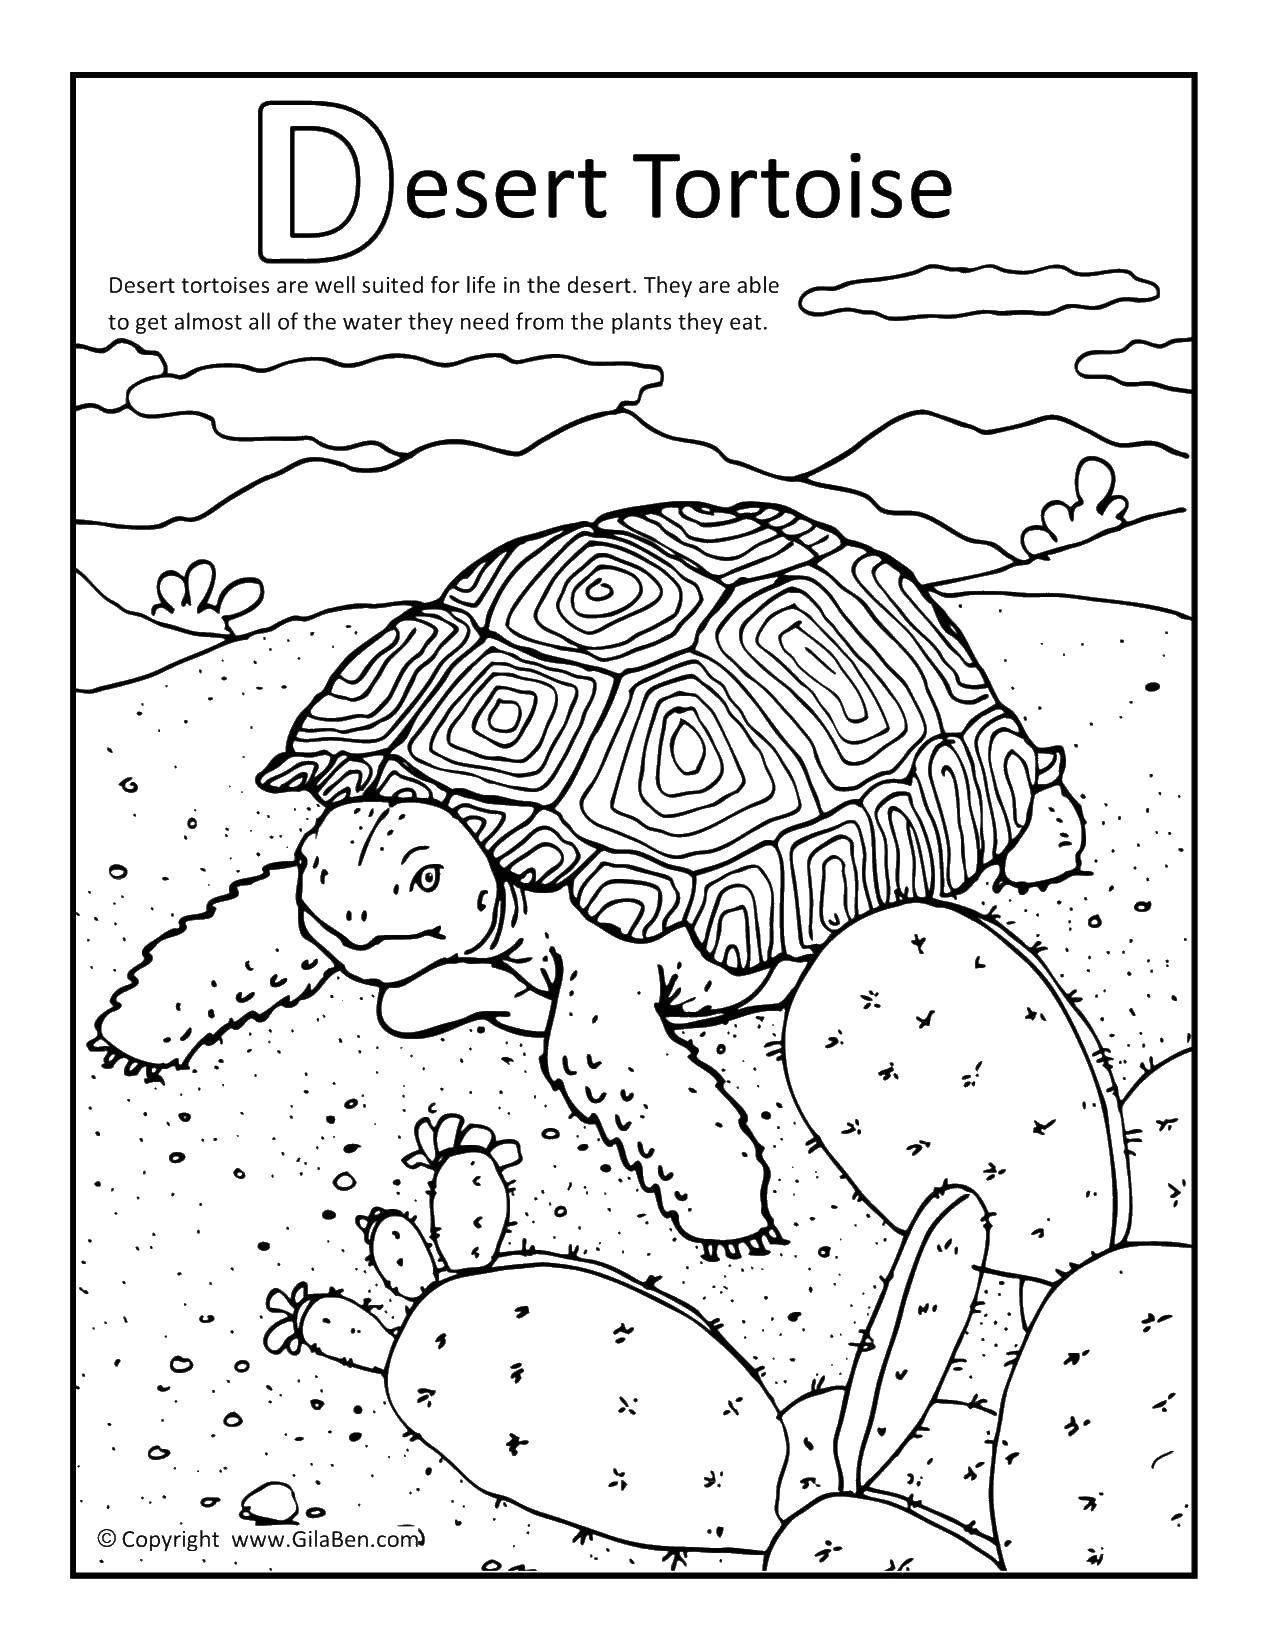 Coloring Desert tortoise. Category Desert. Tags:  Reptile, turtle.